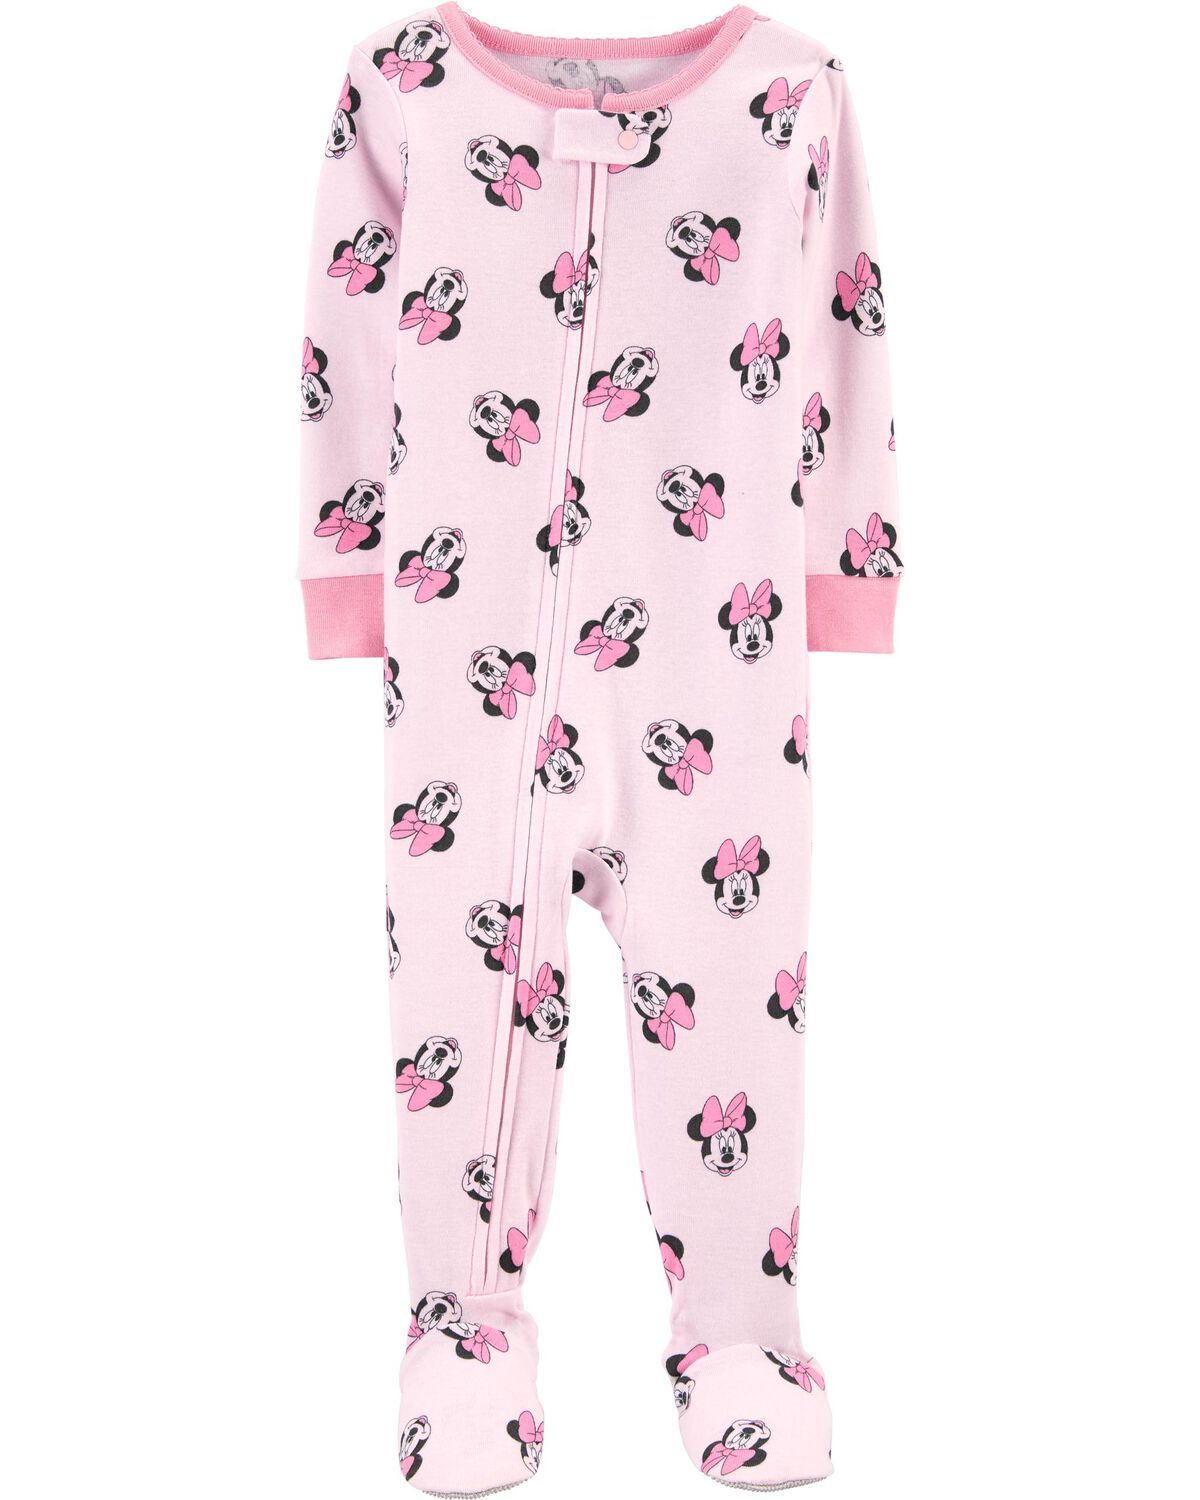 Pink Toddler 1-Piece Minnie Mouse 100% Snug Fit Cotton Footie Pajamas | carters.com | Carter's